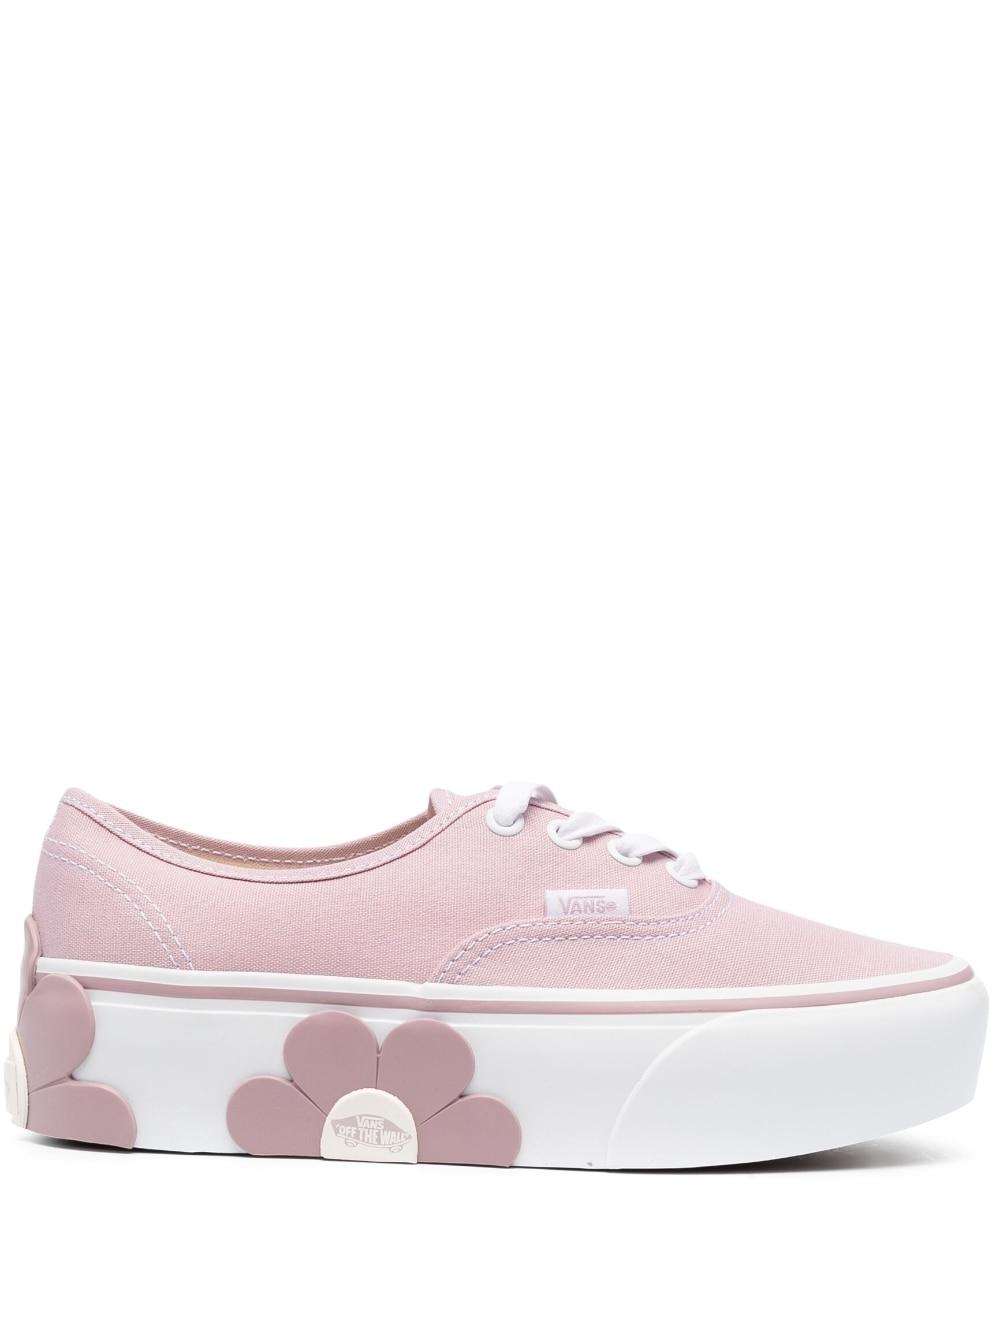 Vans Flower-appliqué Platform Sneakers in Pink | Lyst UK